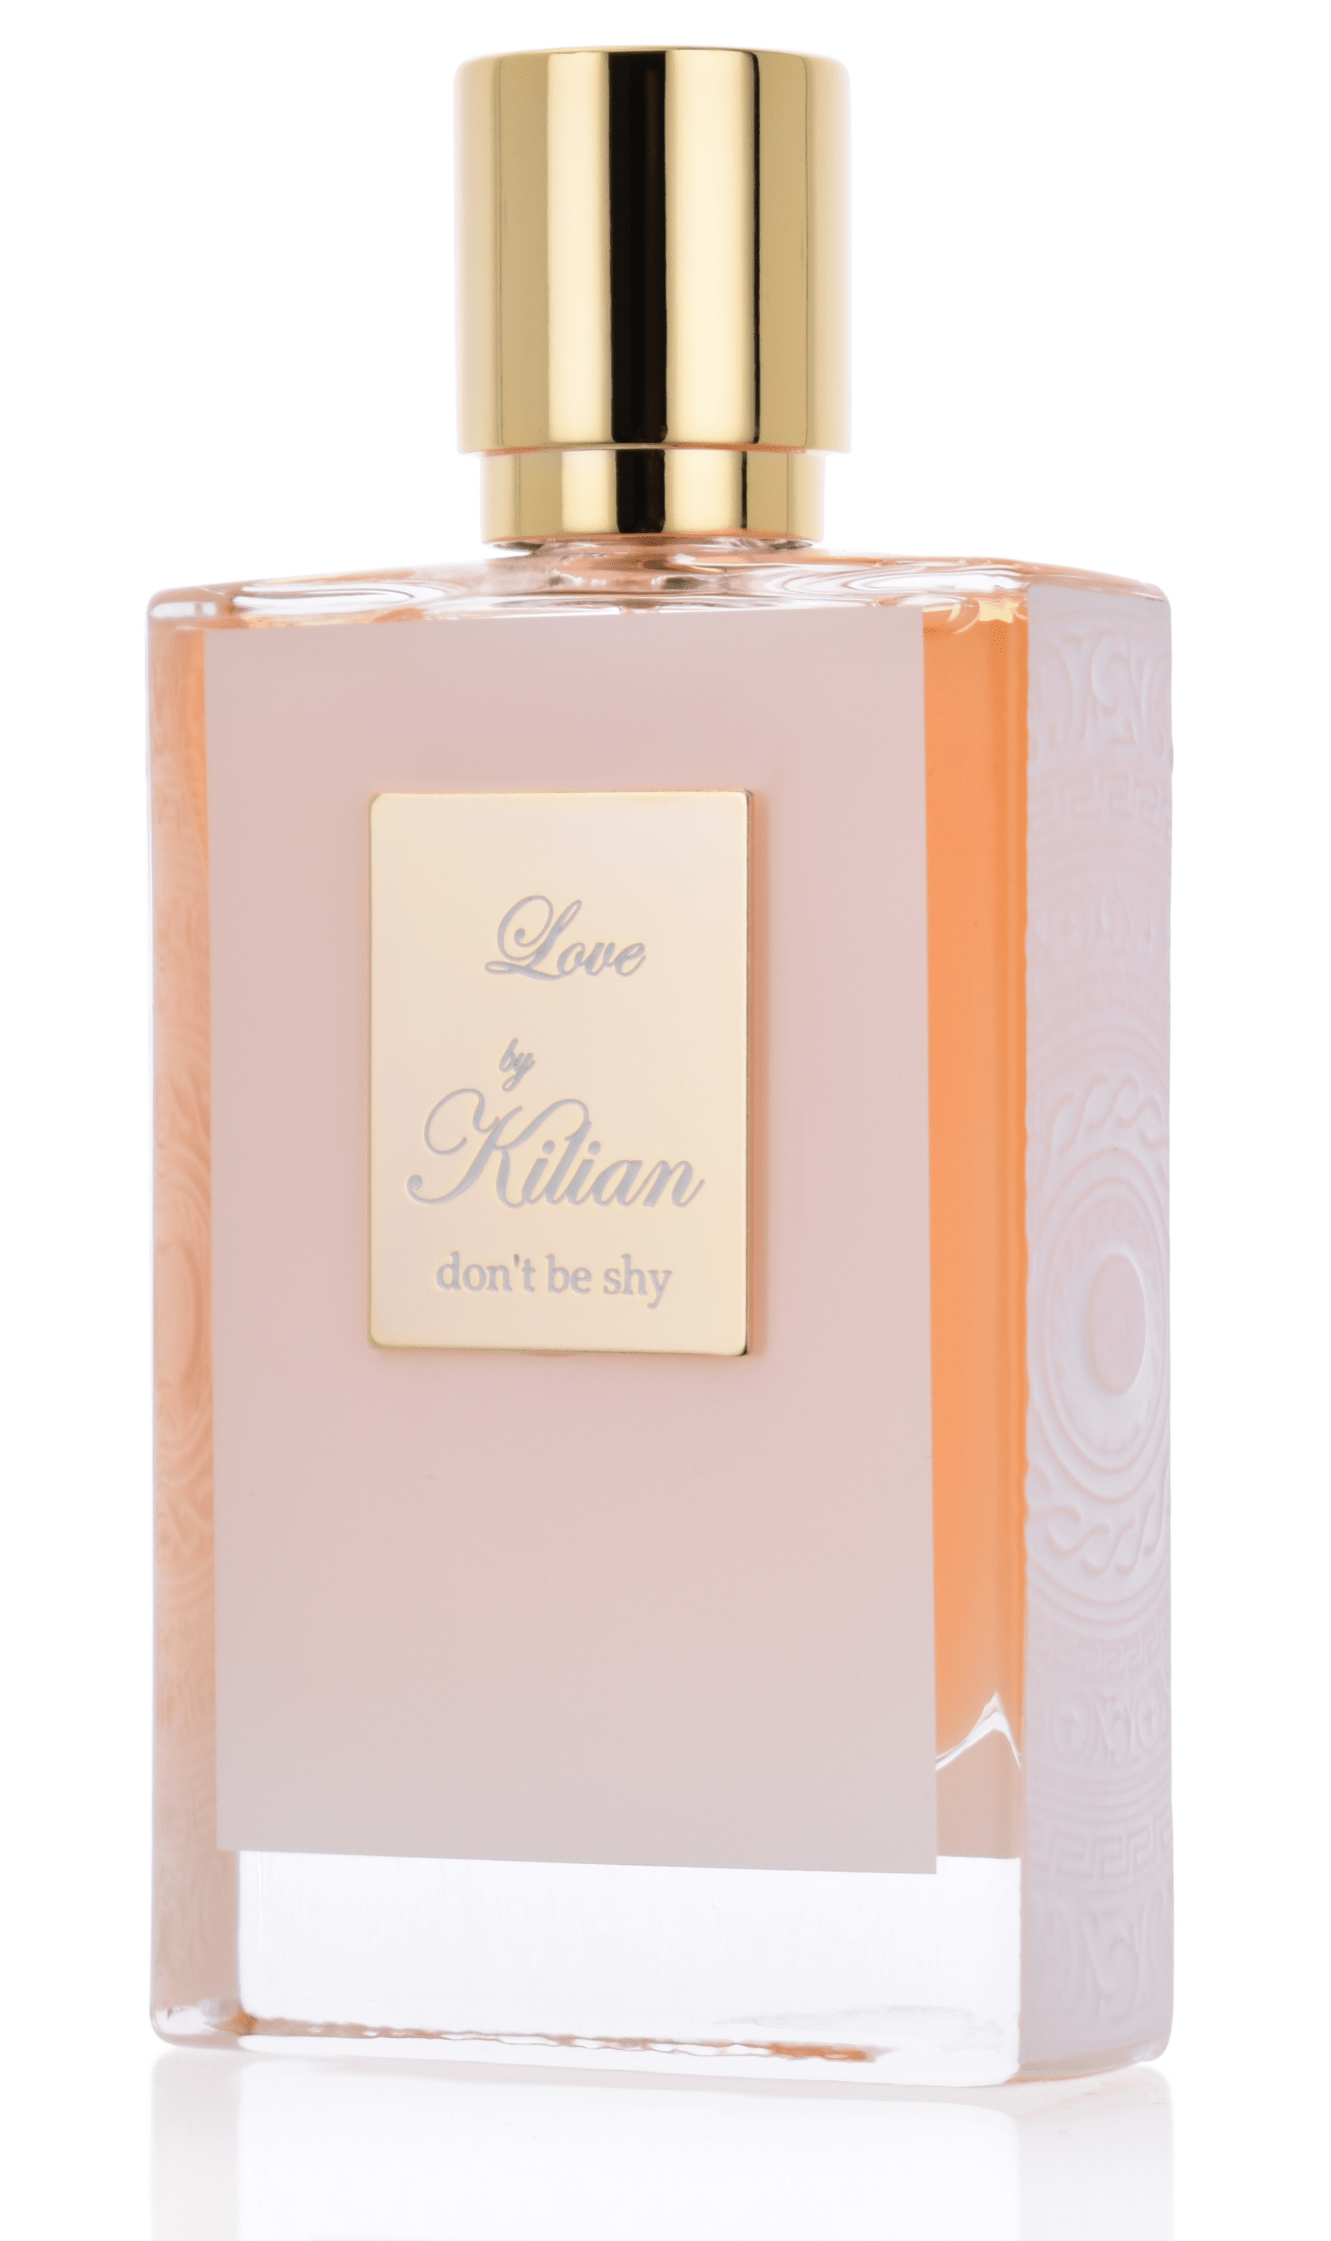 Kilian Love, don't be shy 5 ml Eau de Parfum Abfüllung